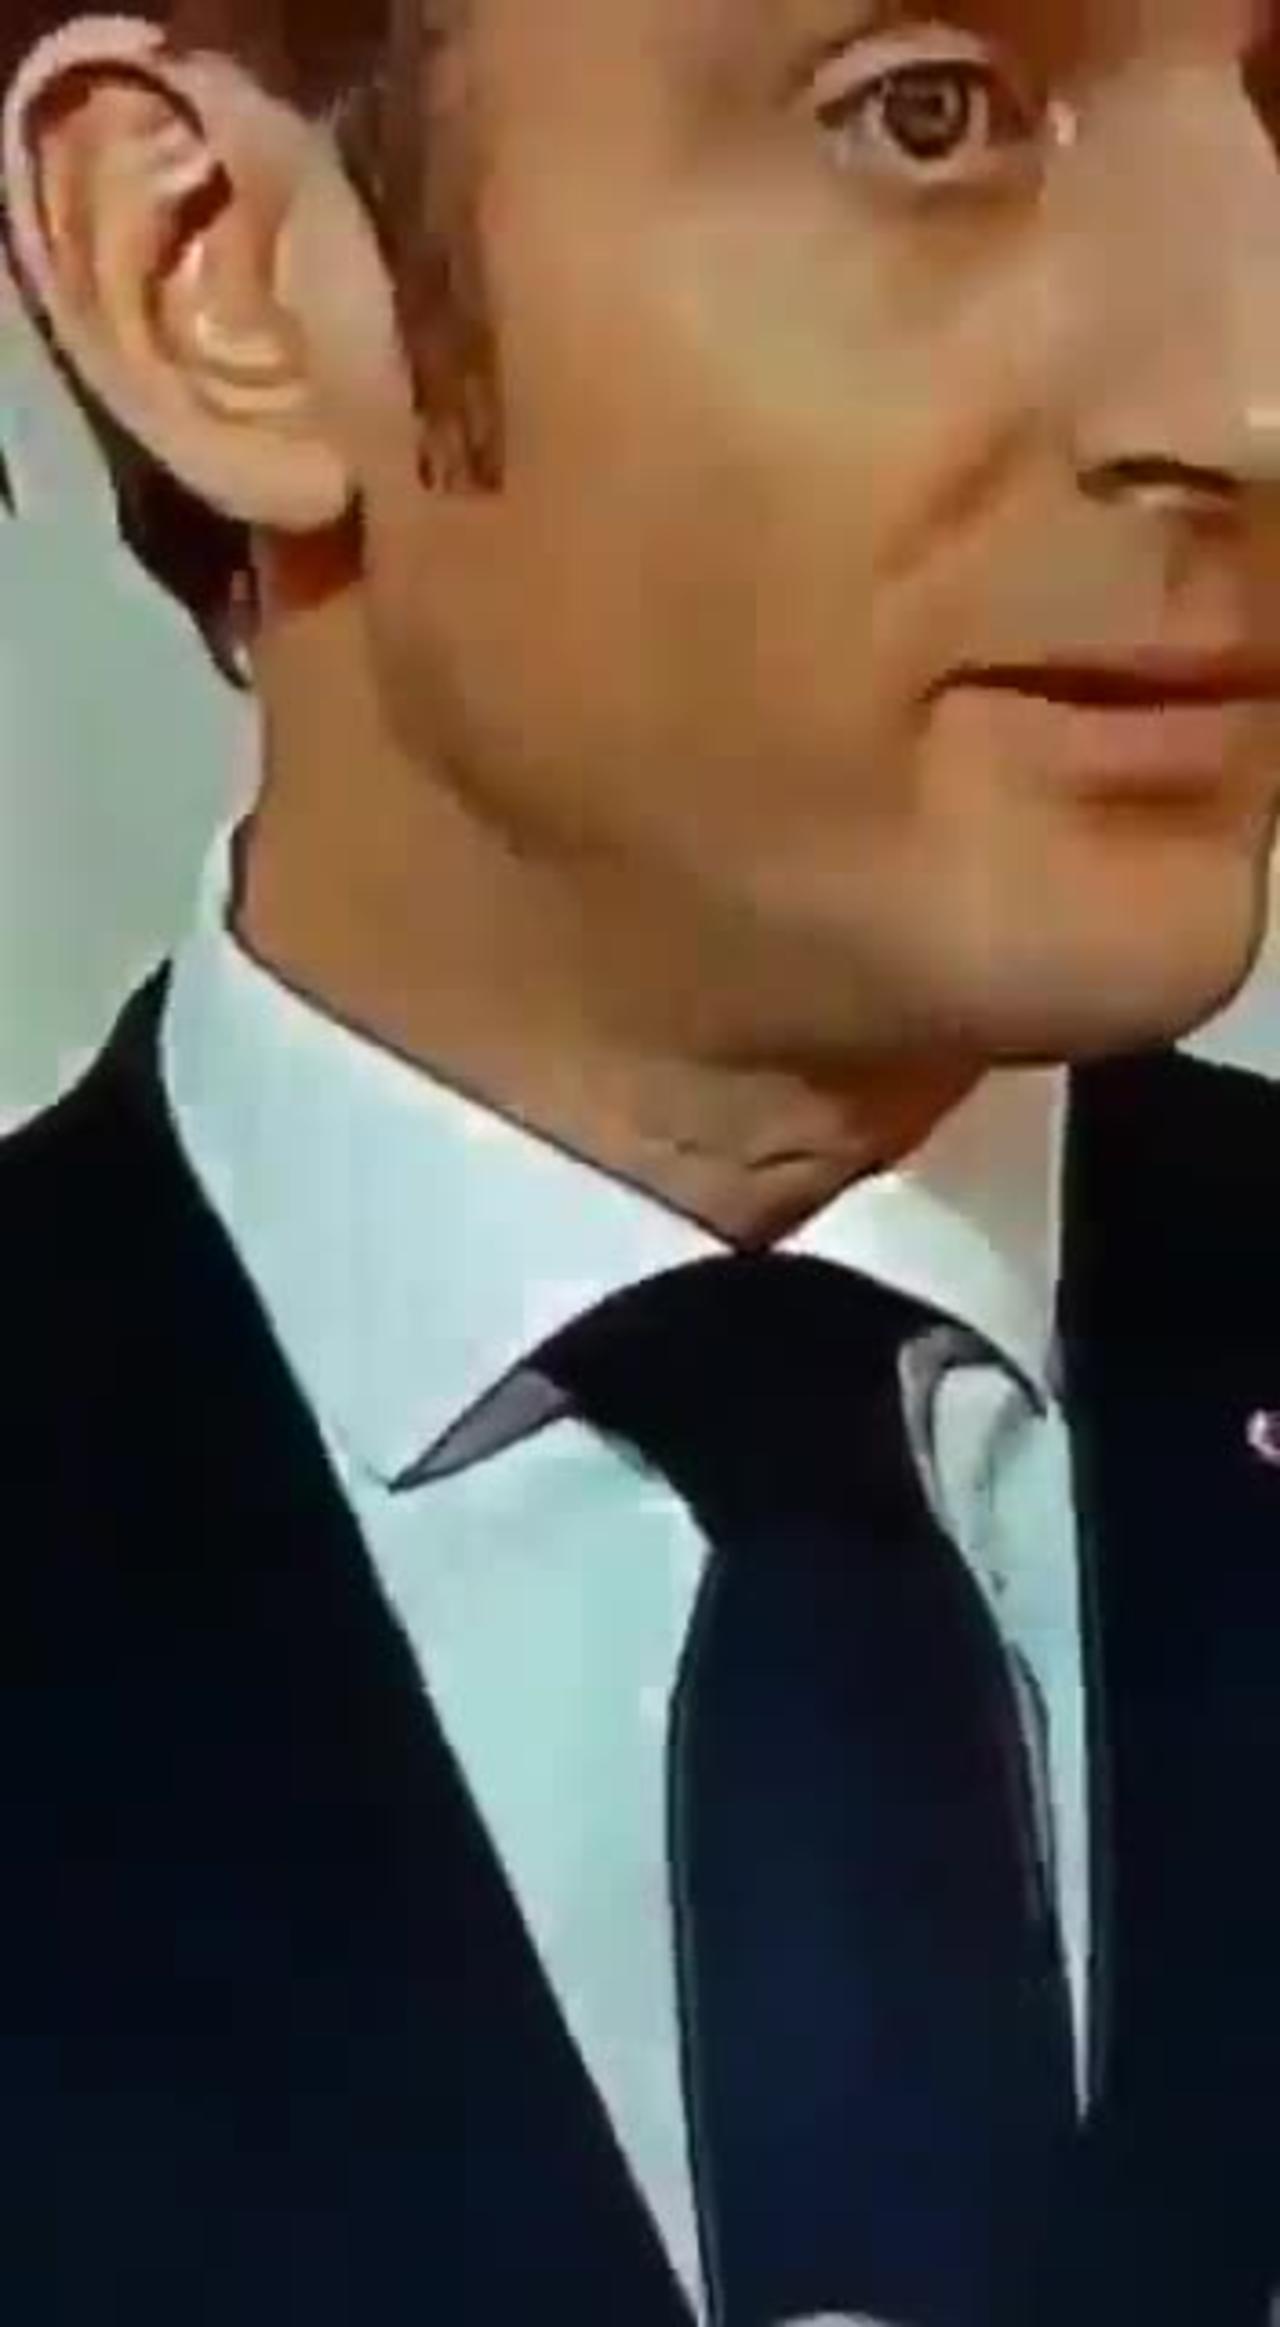 What’s happening to Emmanuel Macron’s neck?